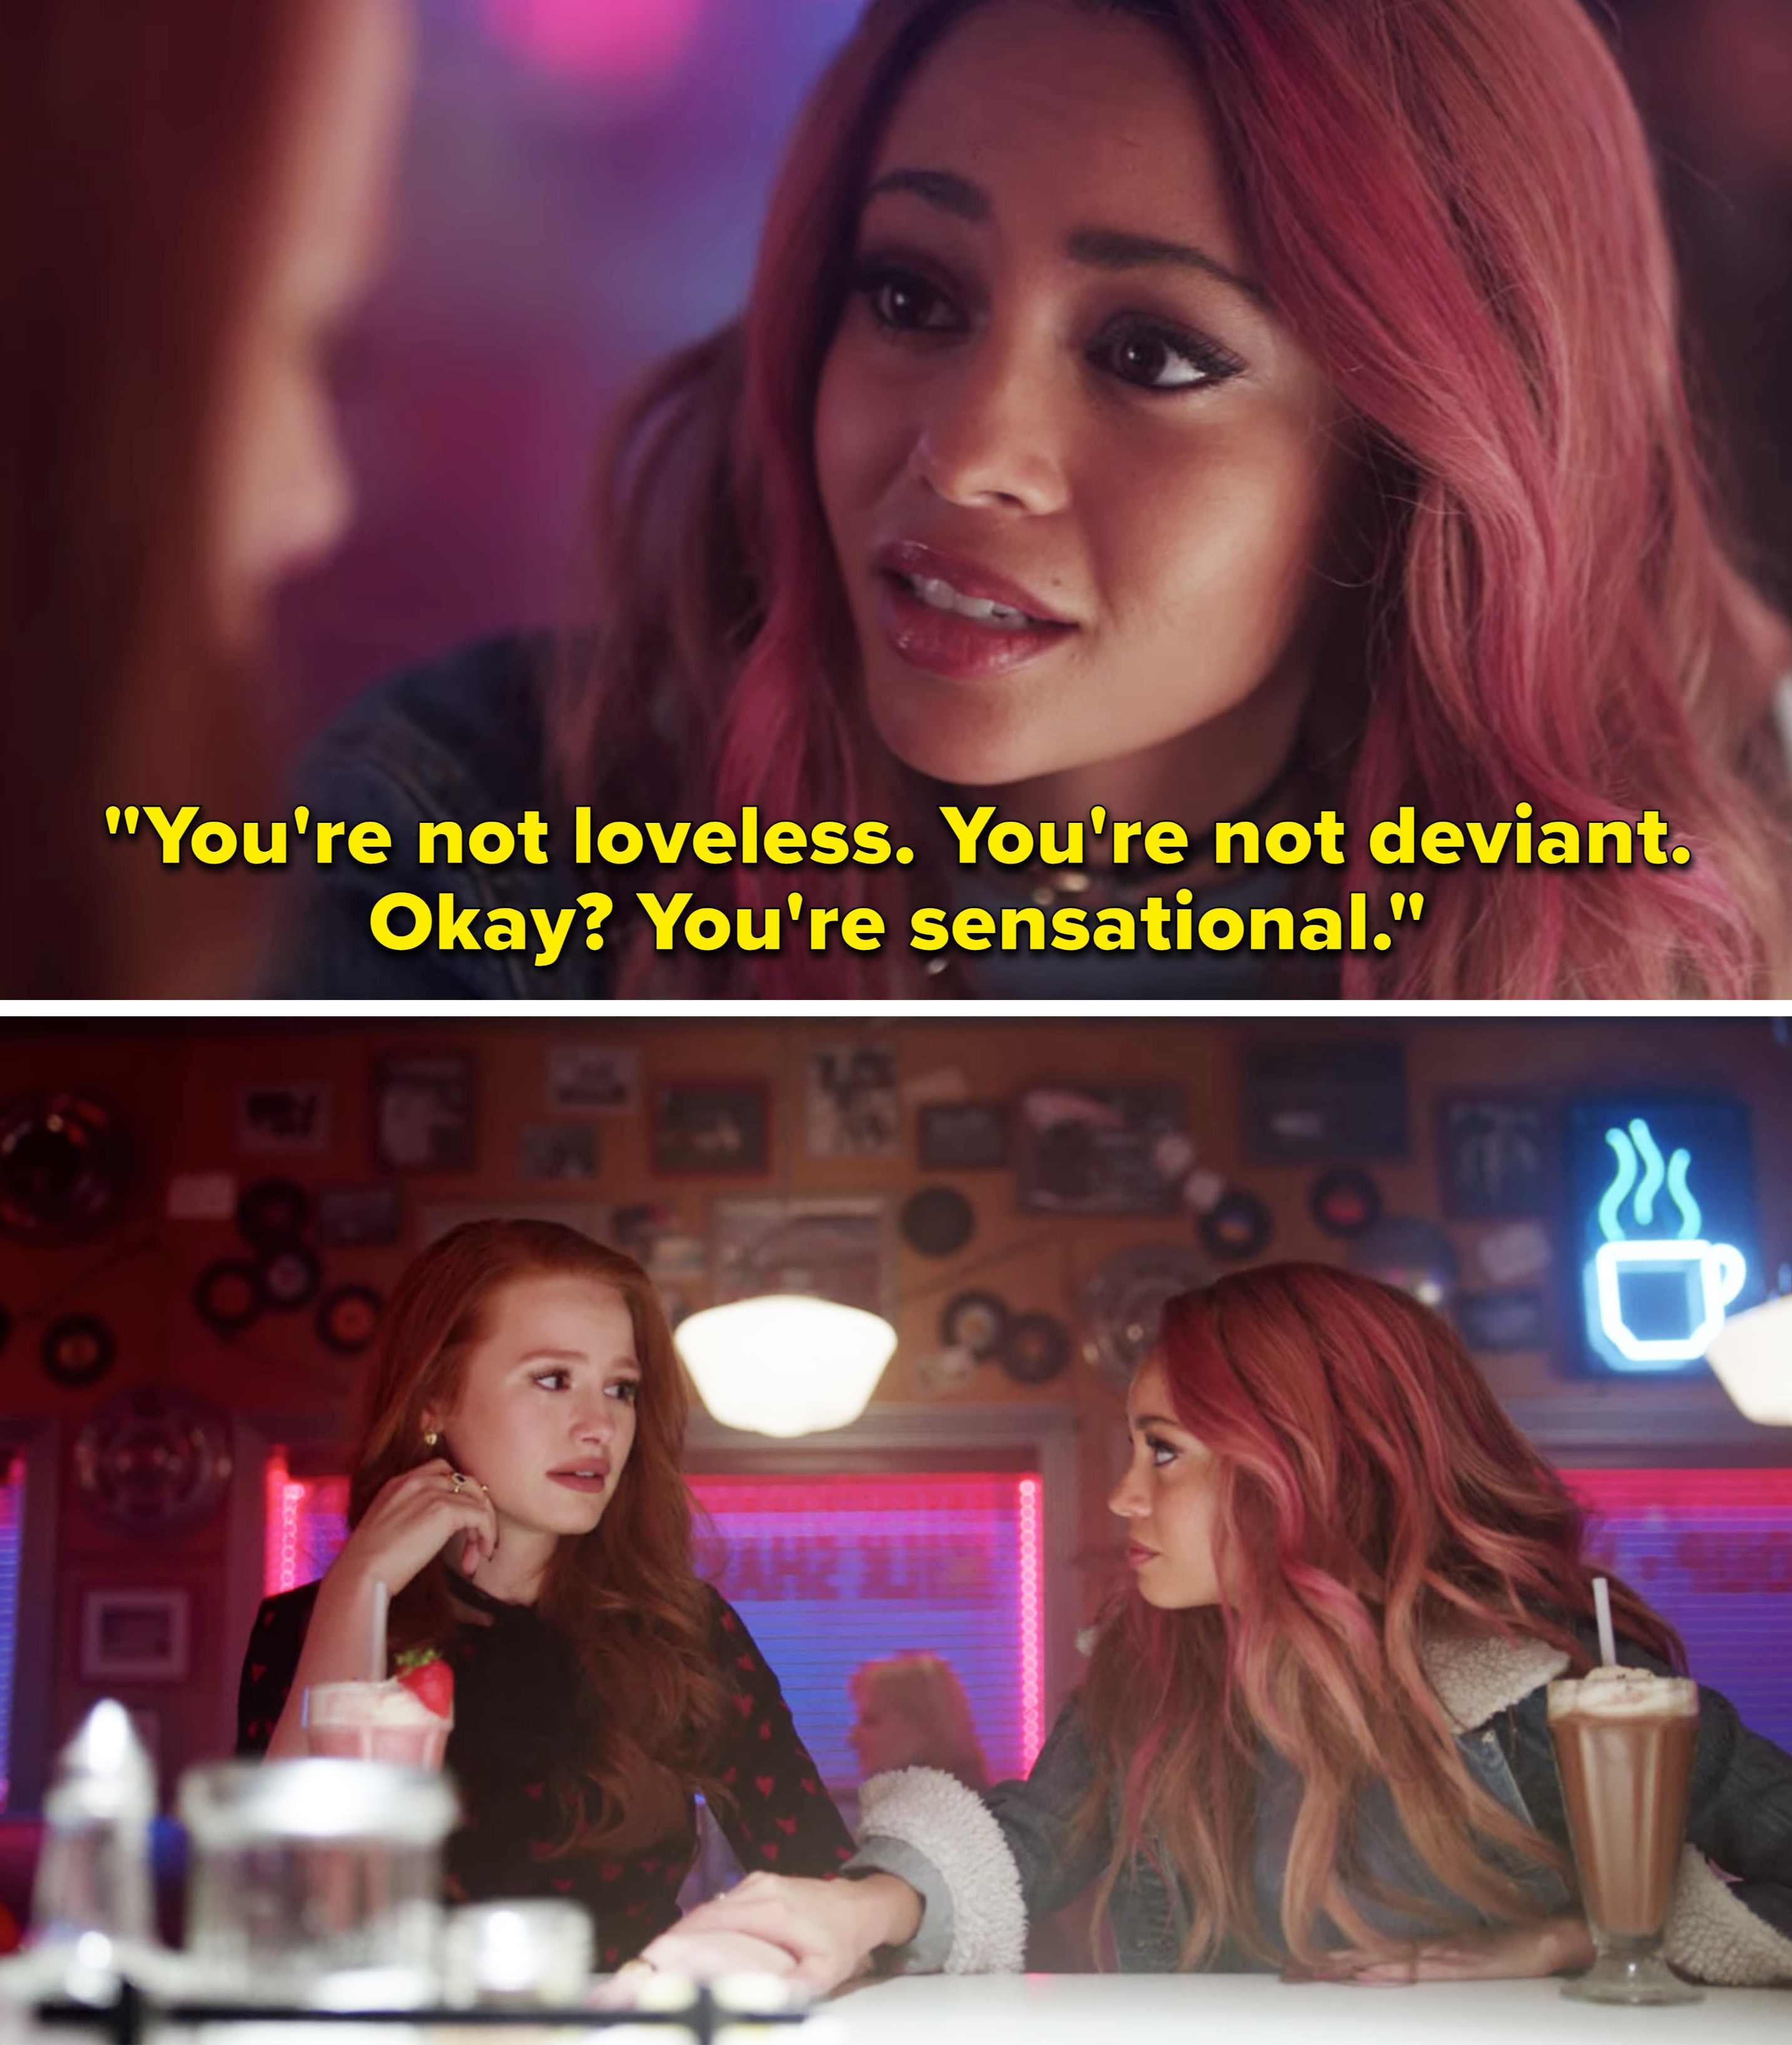 Toni tells Cheryl she&#x27;s not loveless or deviant, she&#x27;s sensational